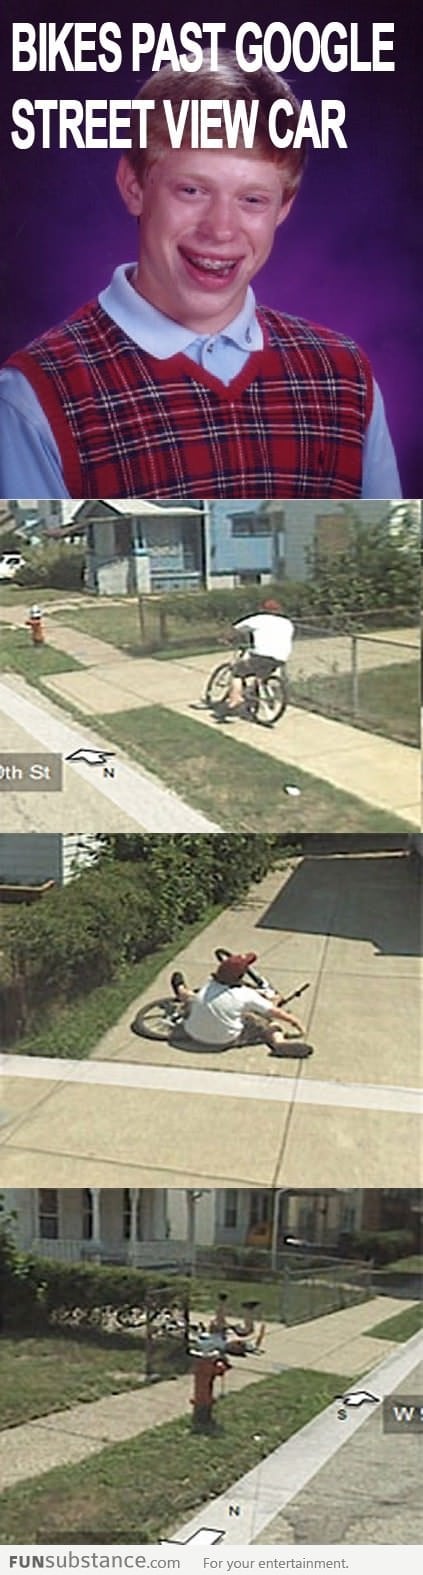 Brian bikes past Google street view